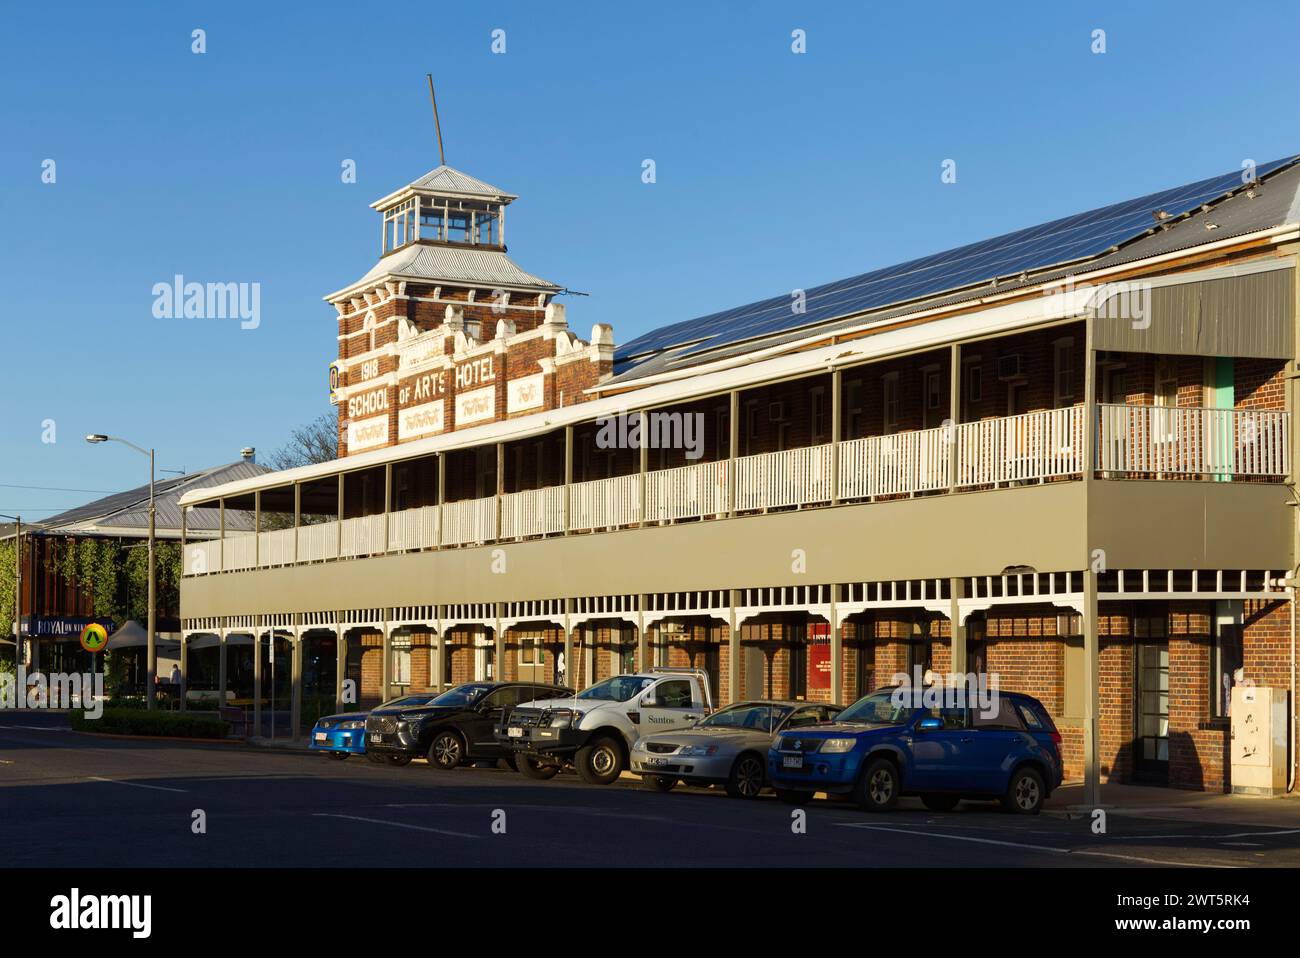 The historic School of Arts Hotel (1918) on McDowall Street Roma Queensland Australia Stock Photo